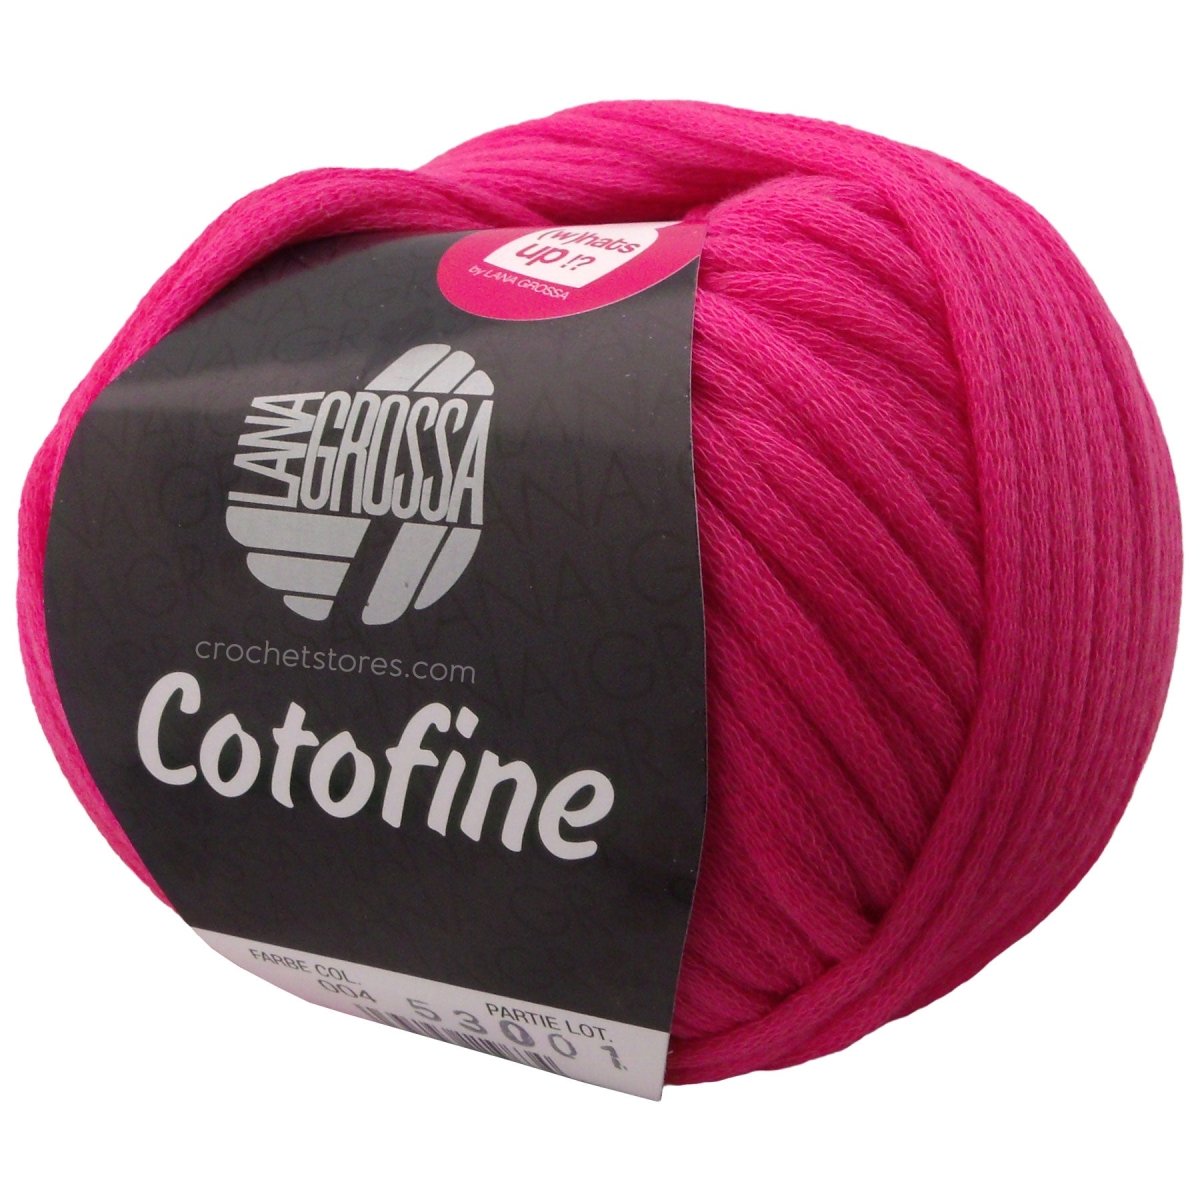 COTOFINE - Crochetstores276-00044033493119634